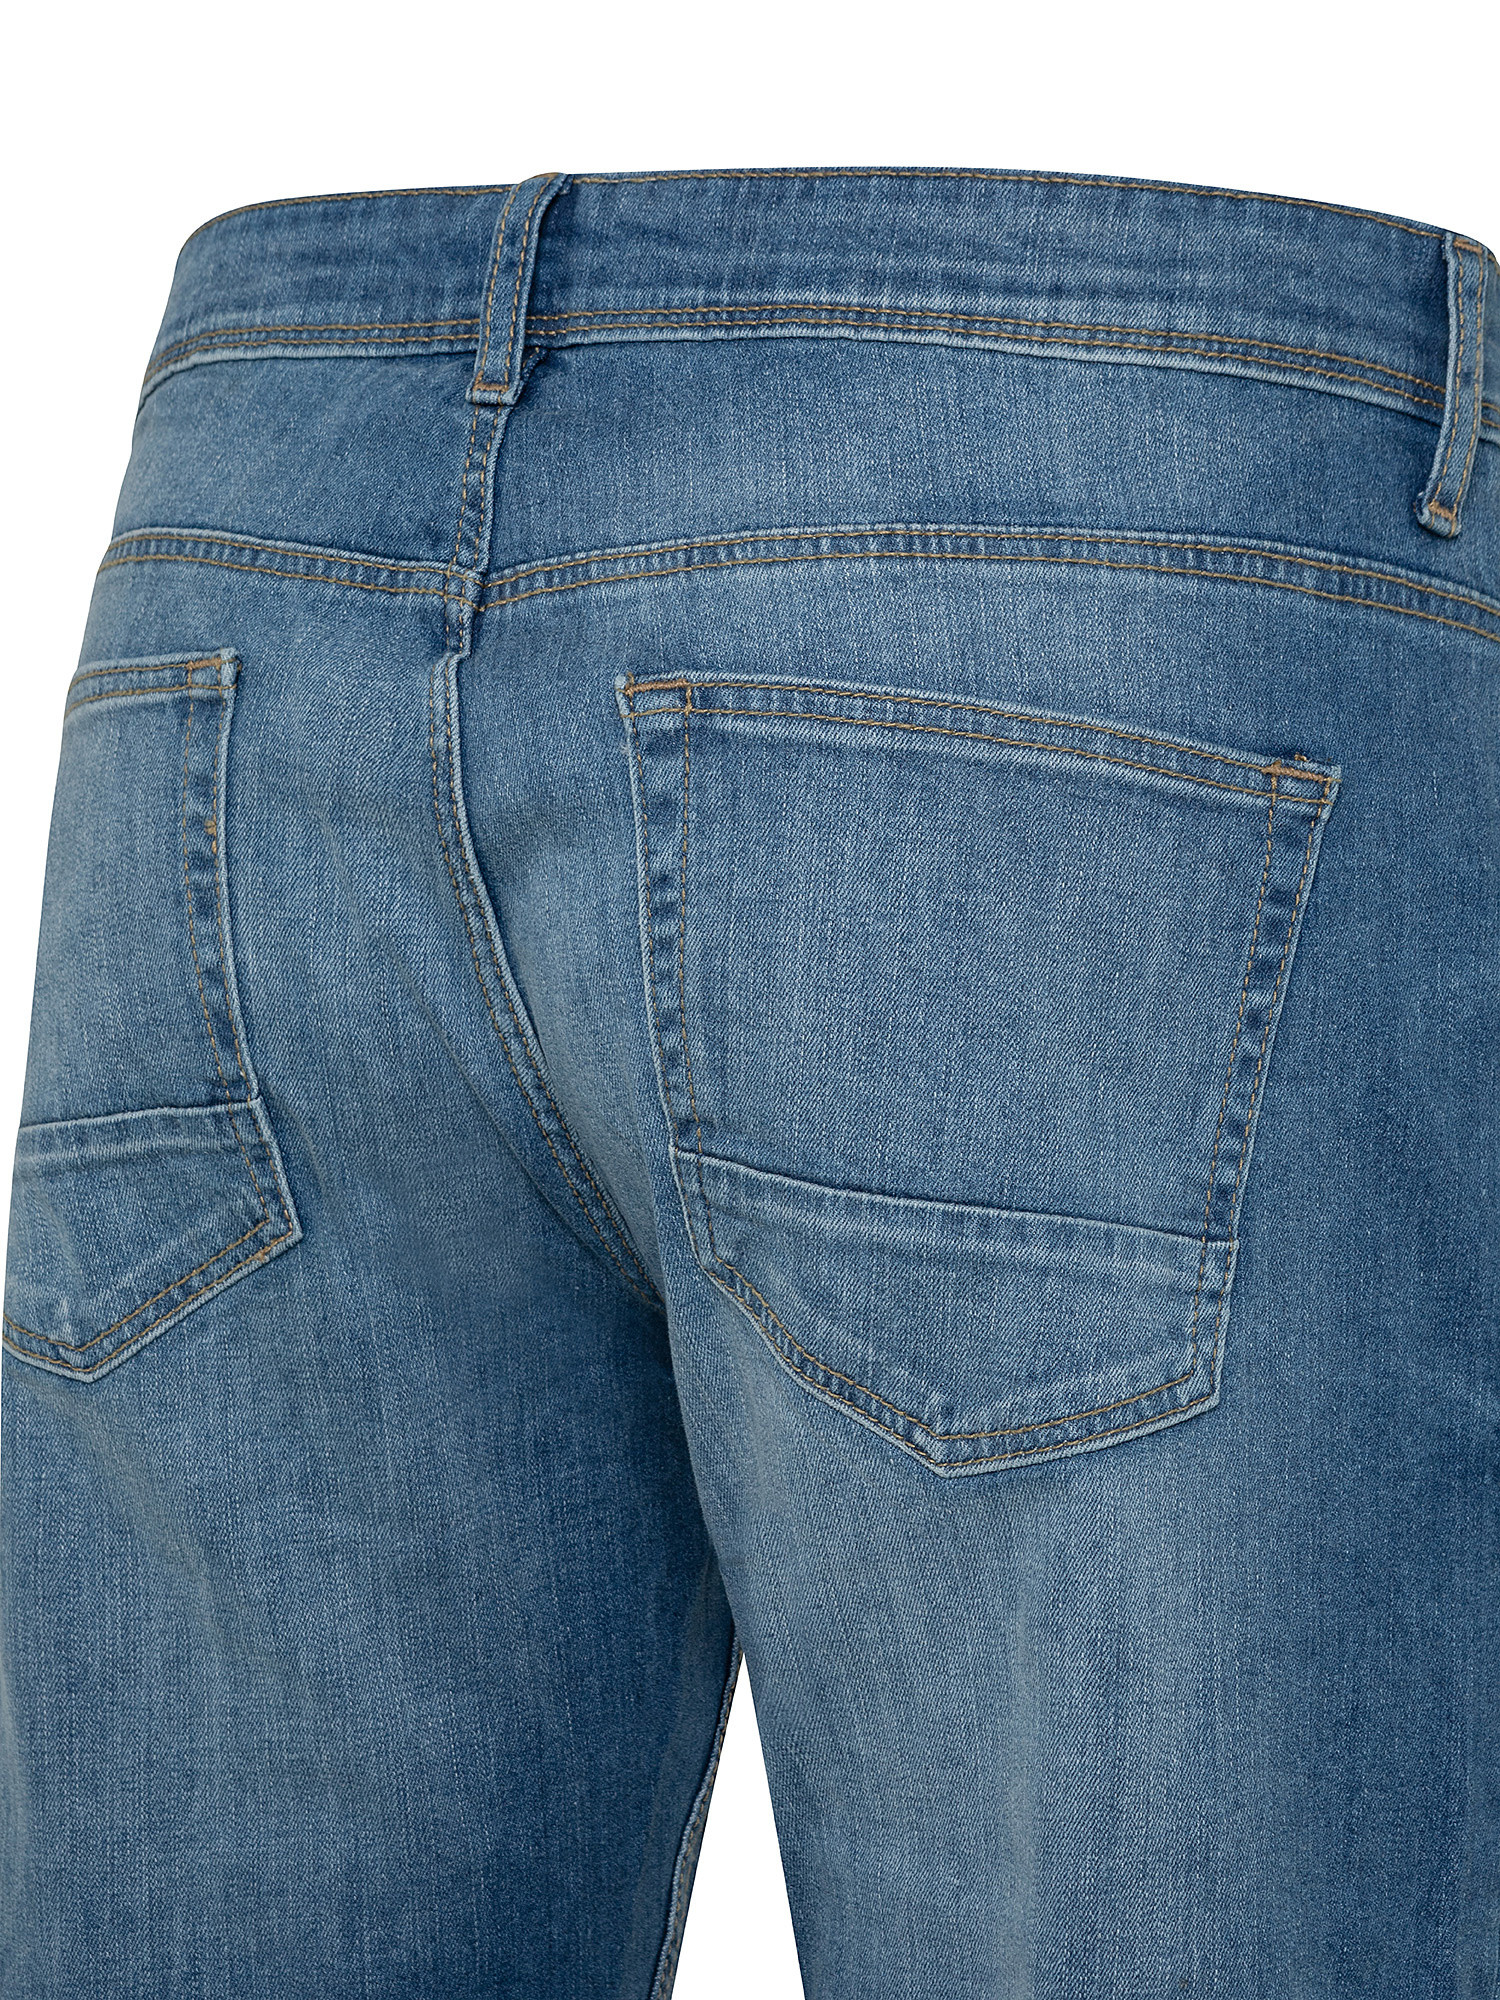 Jeans 5 tasche slim cotone leggero stretch, Blu, large image number 2